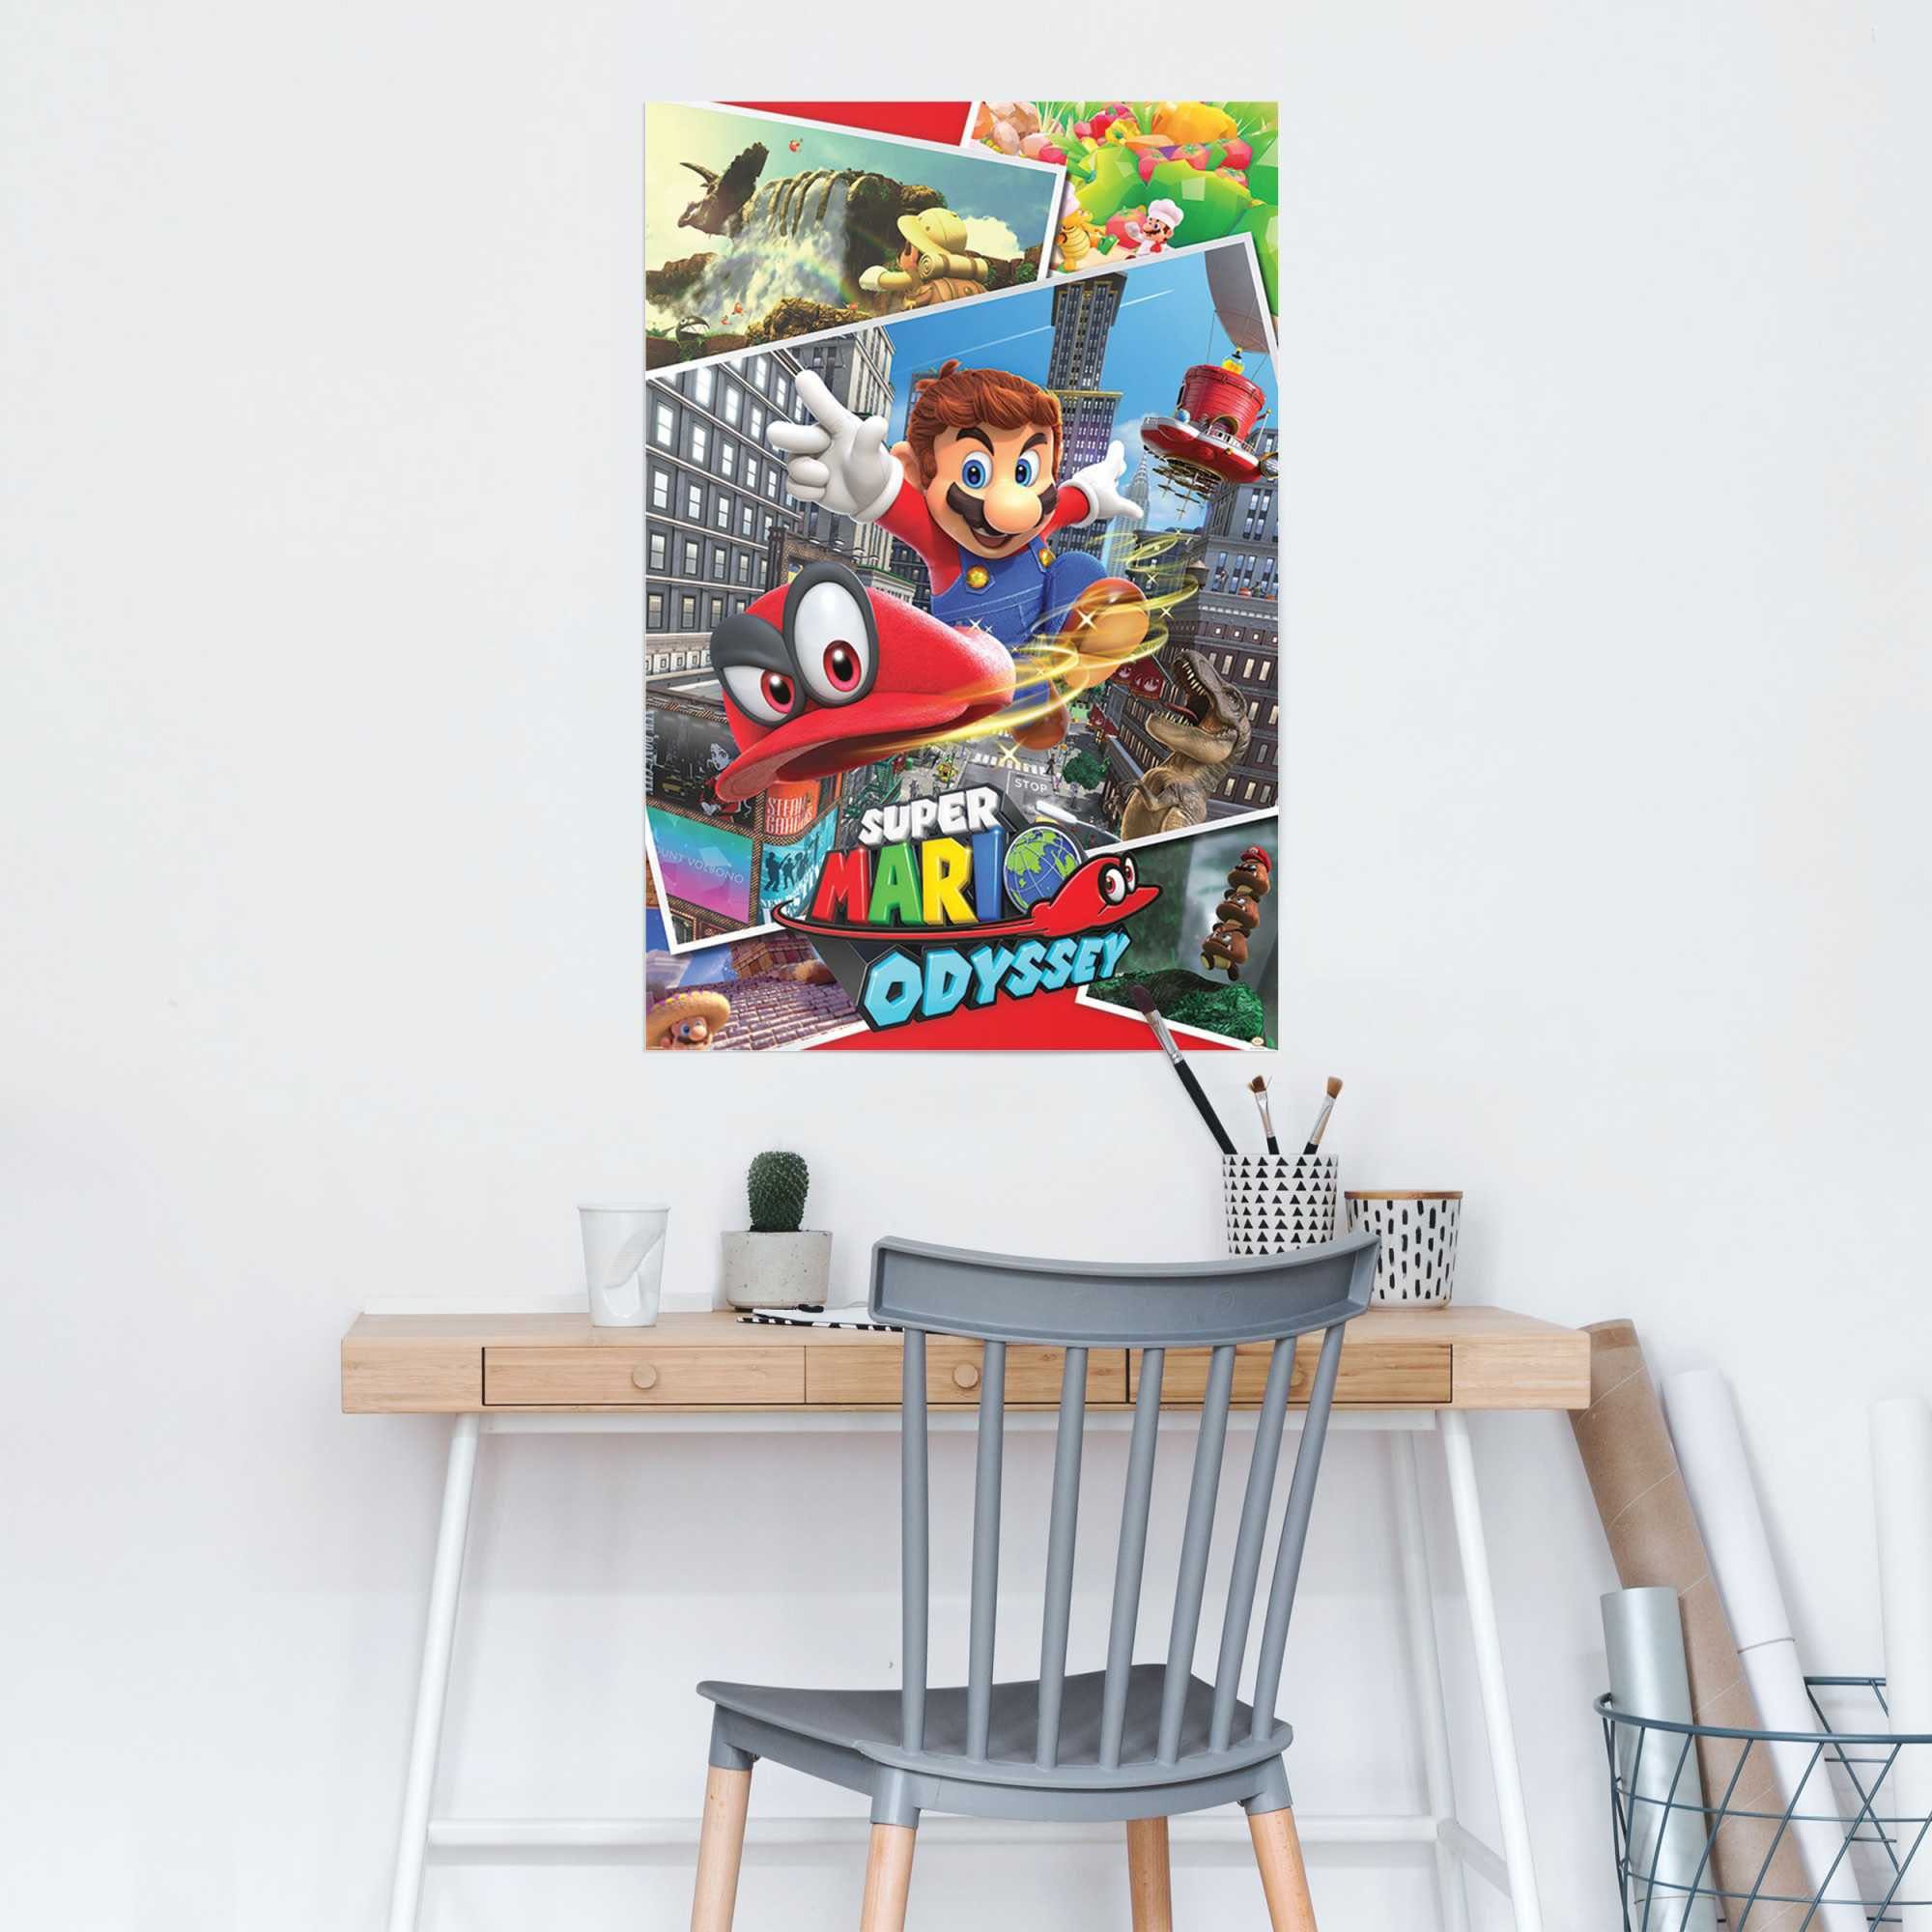 St) Mario Super (1 Odyssey, Poster Reinders!